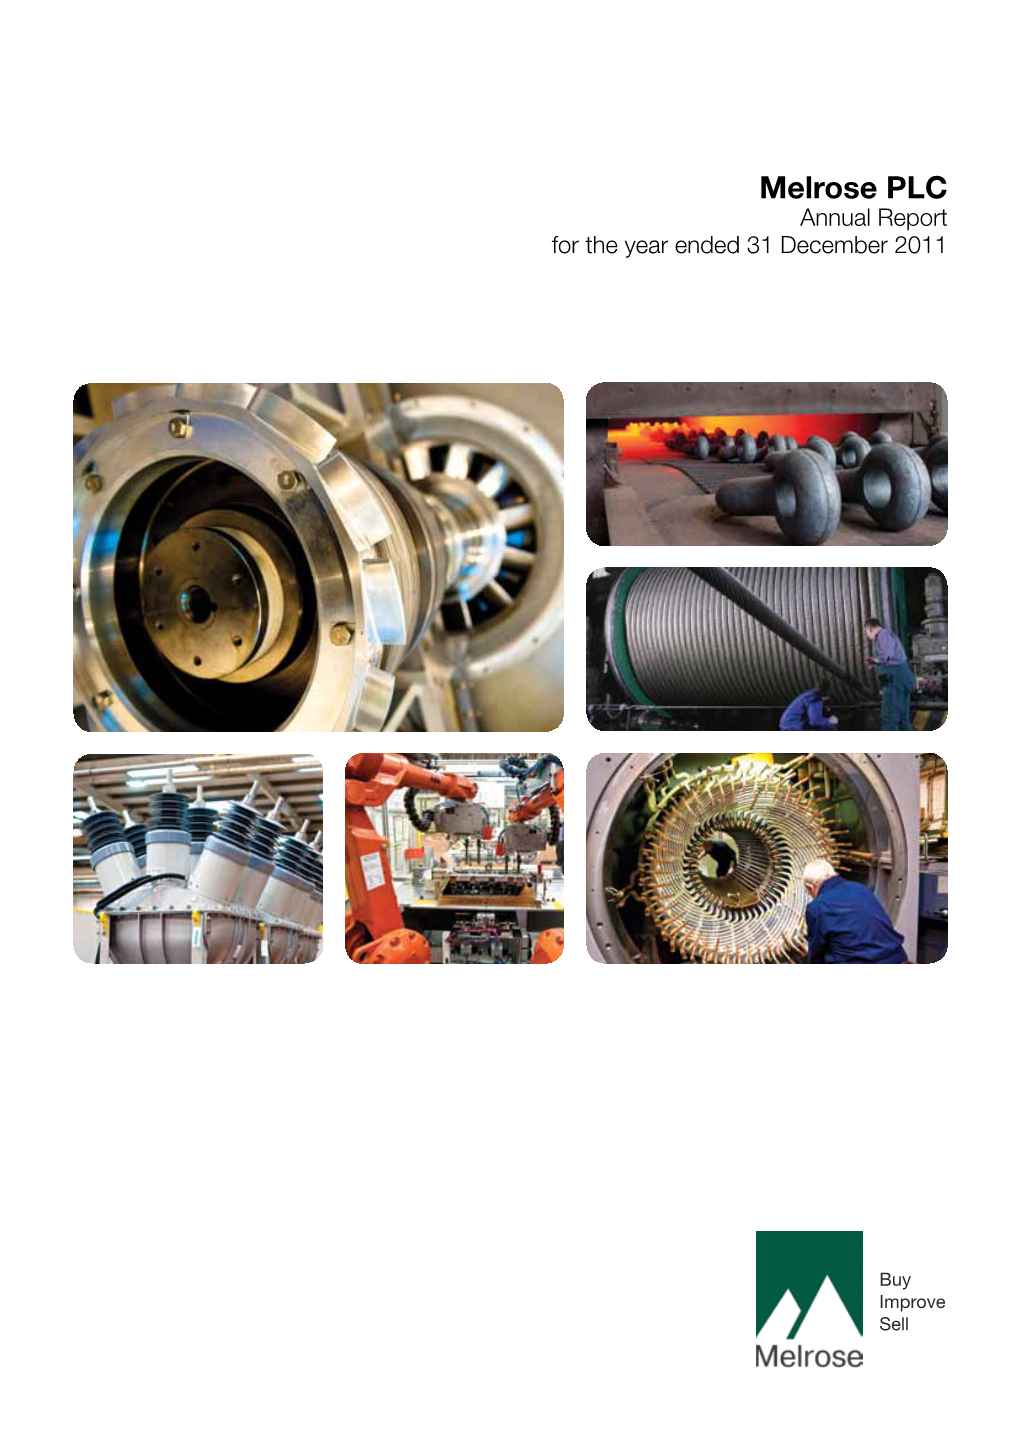 Melrose PLC Annual Report 2011